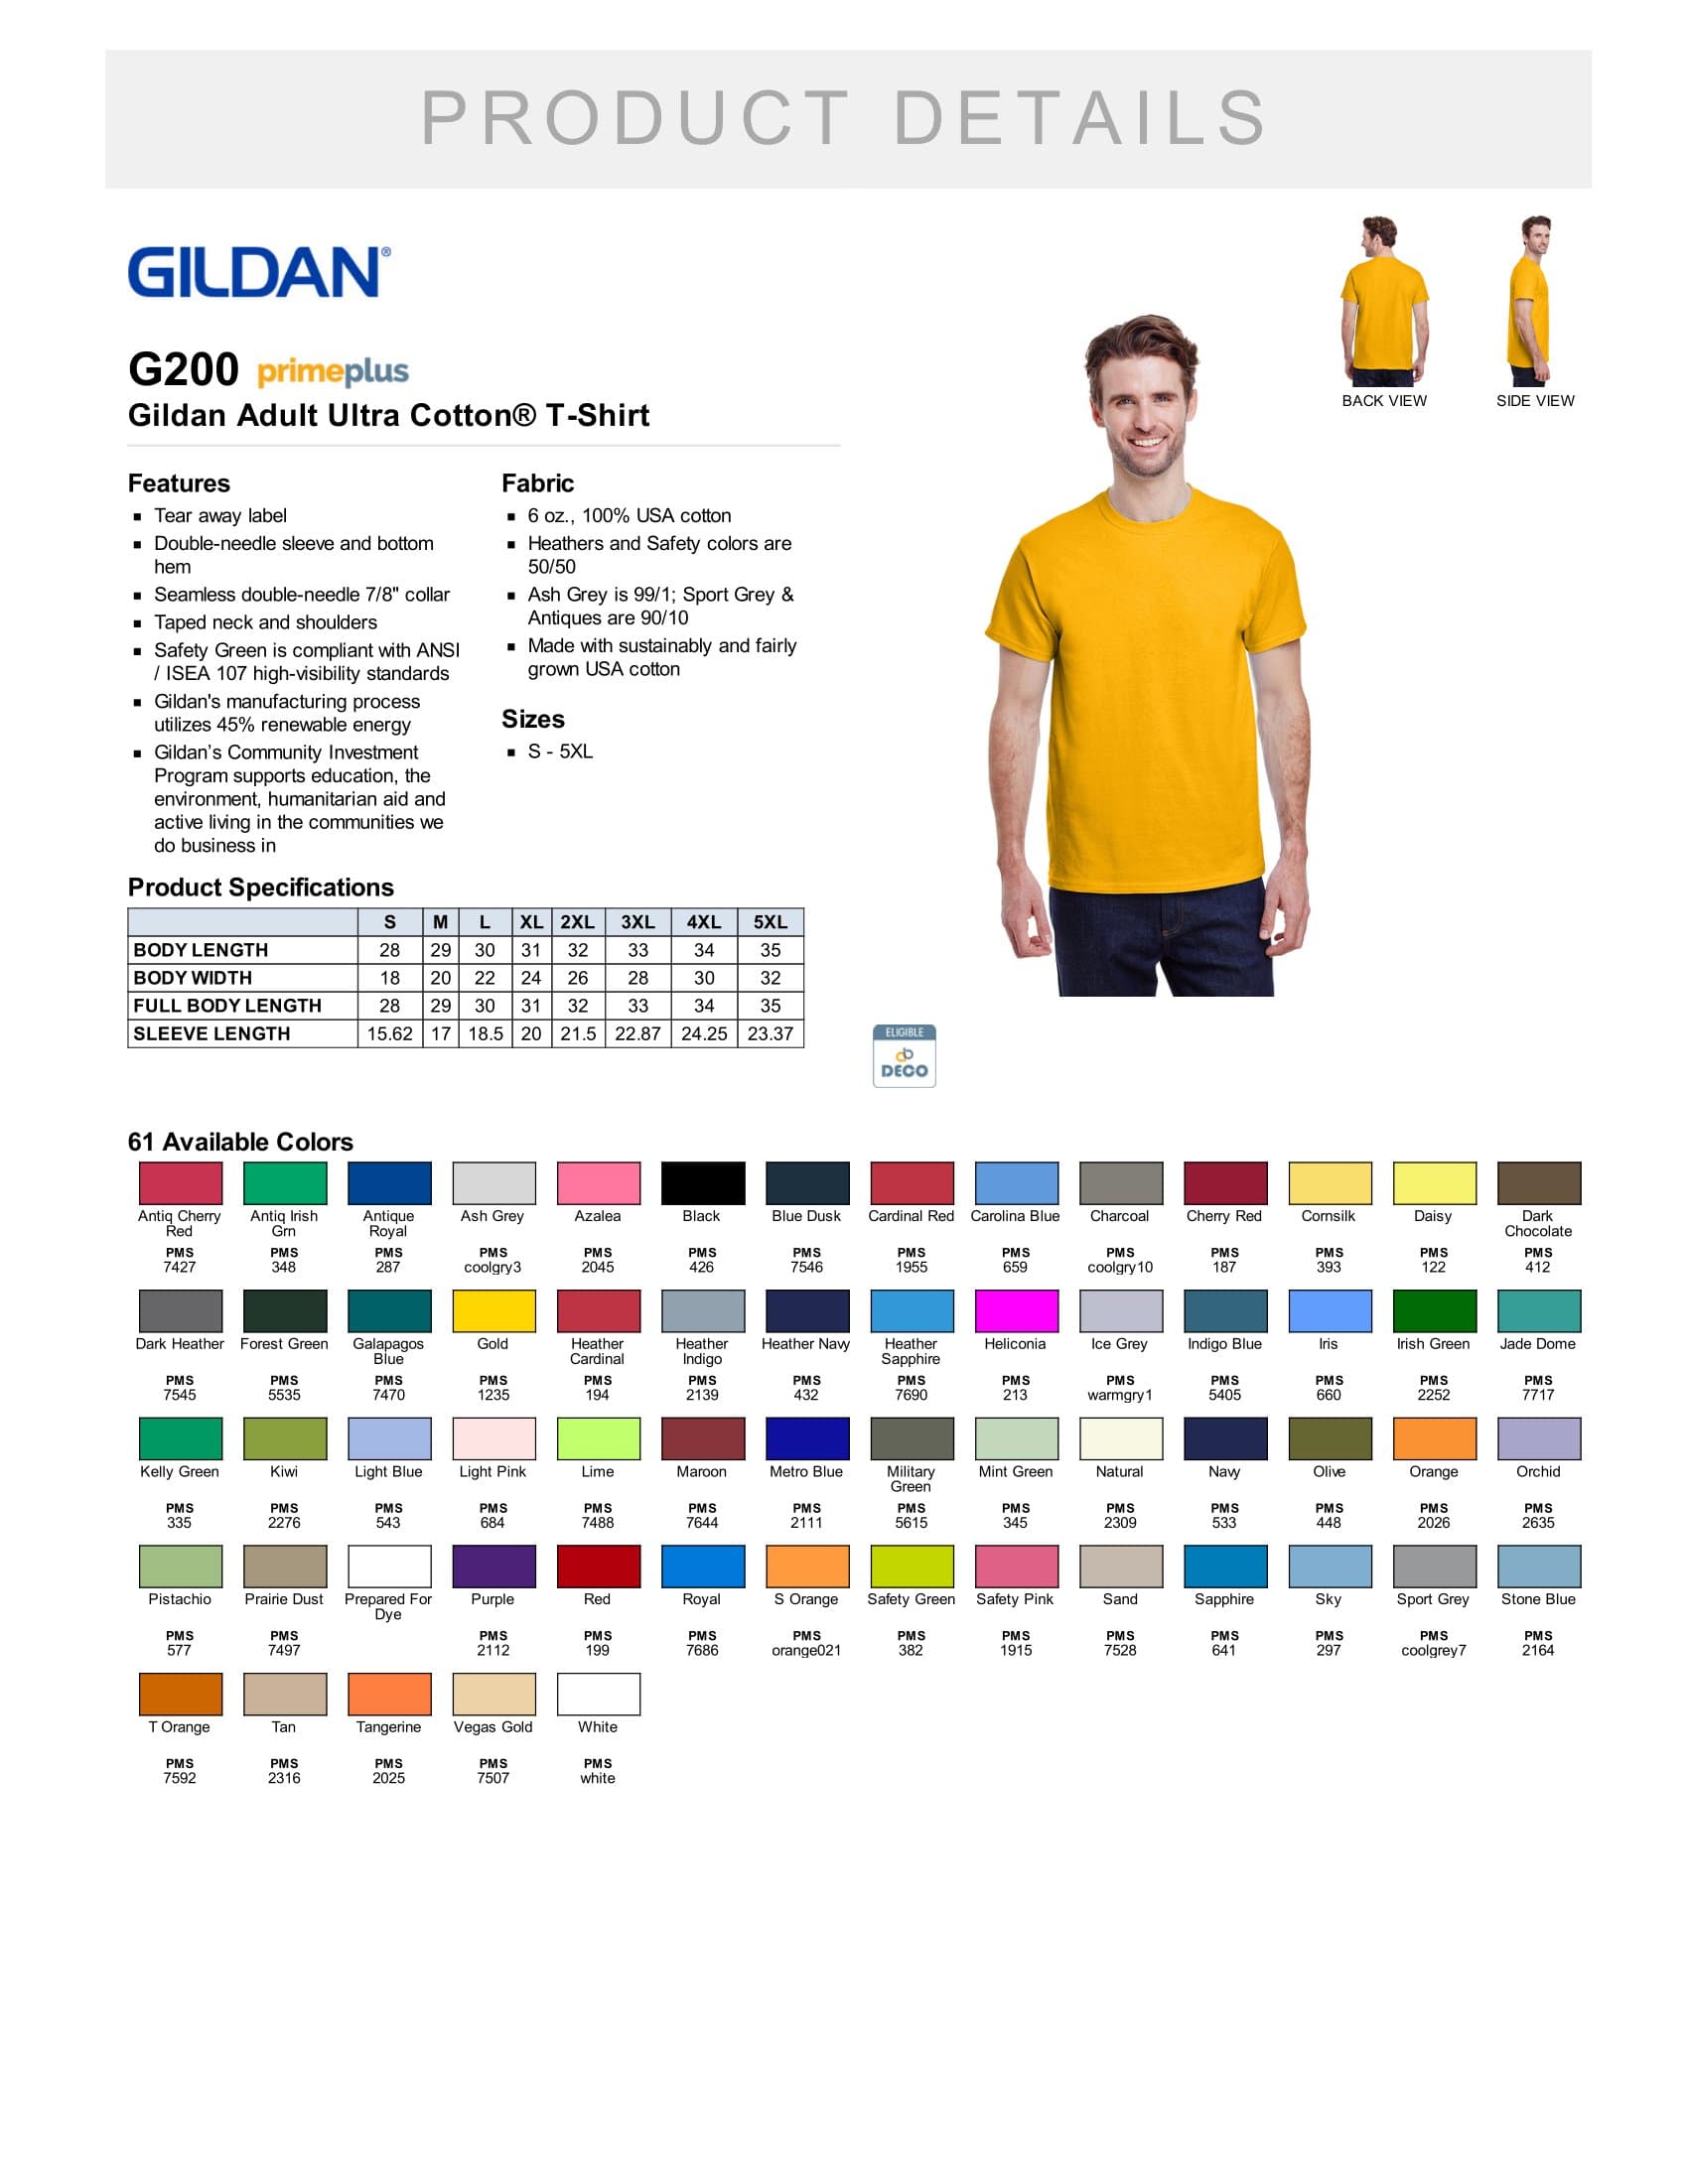 Gildan G200